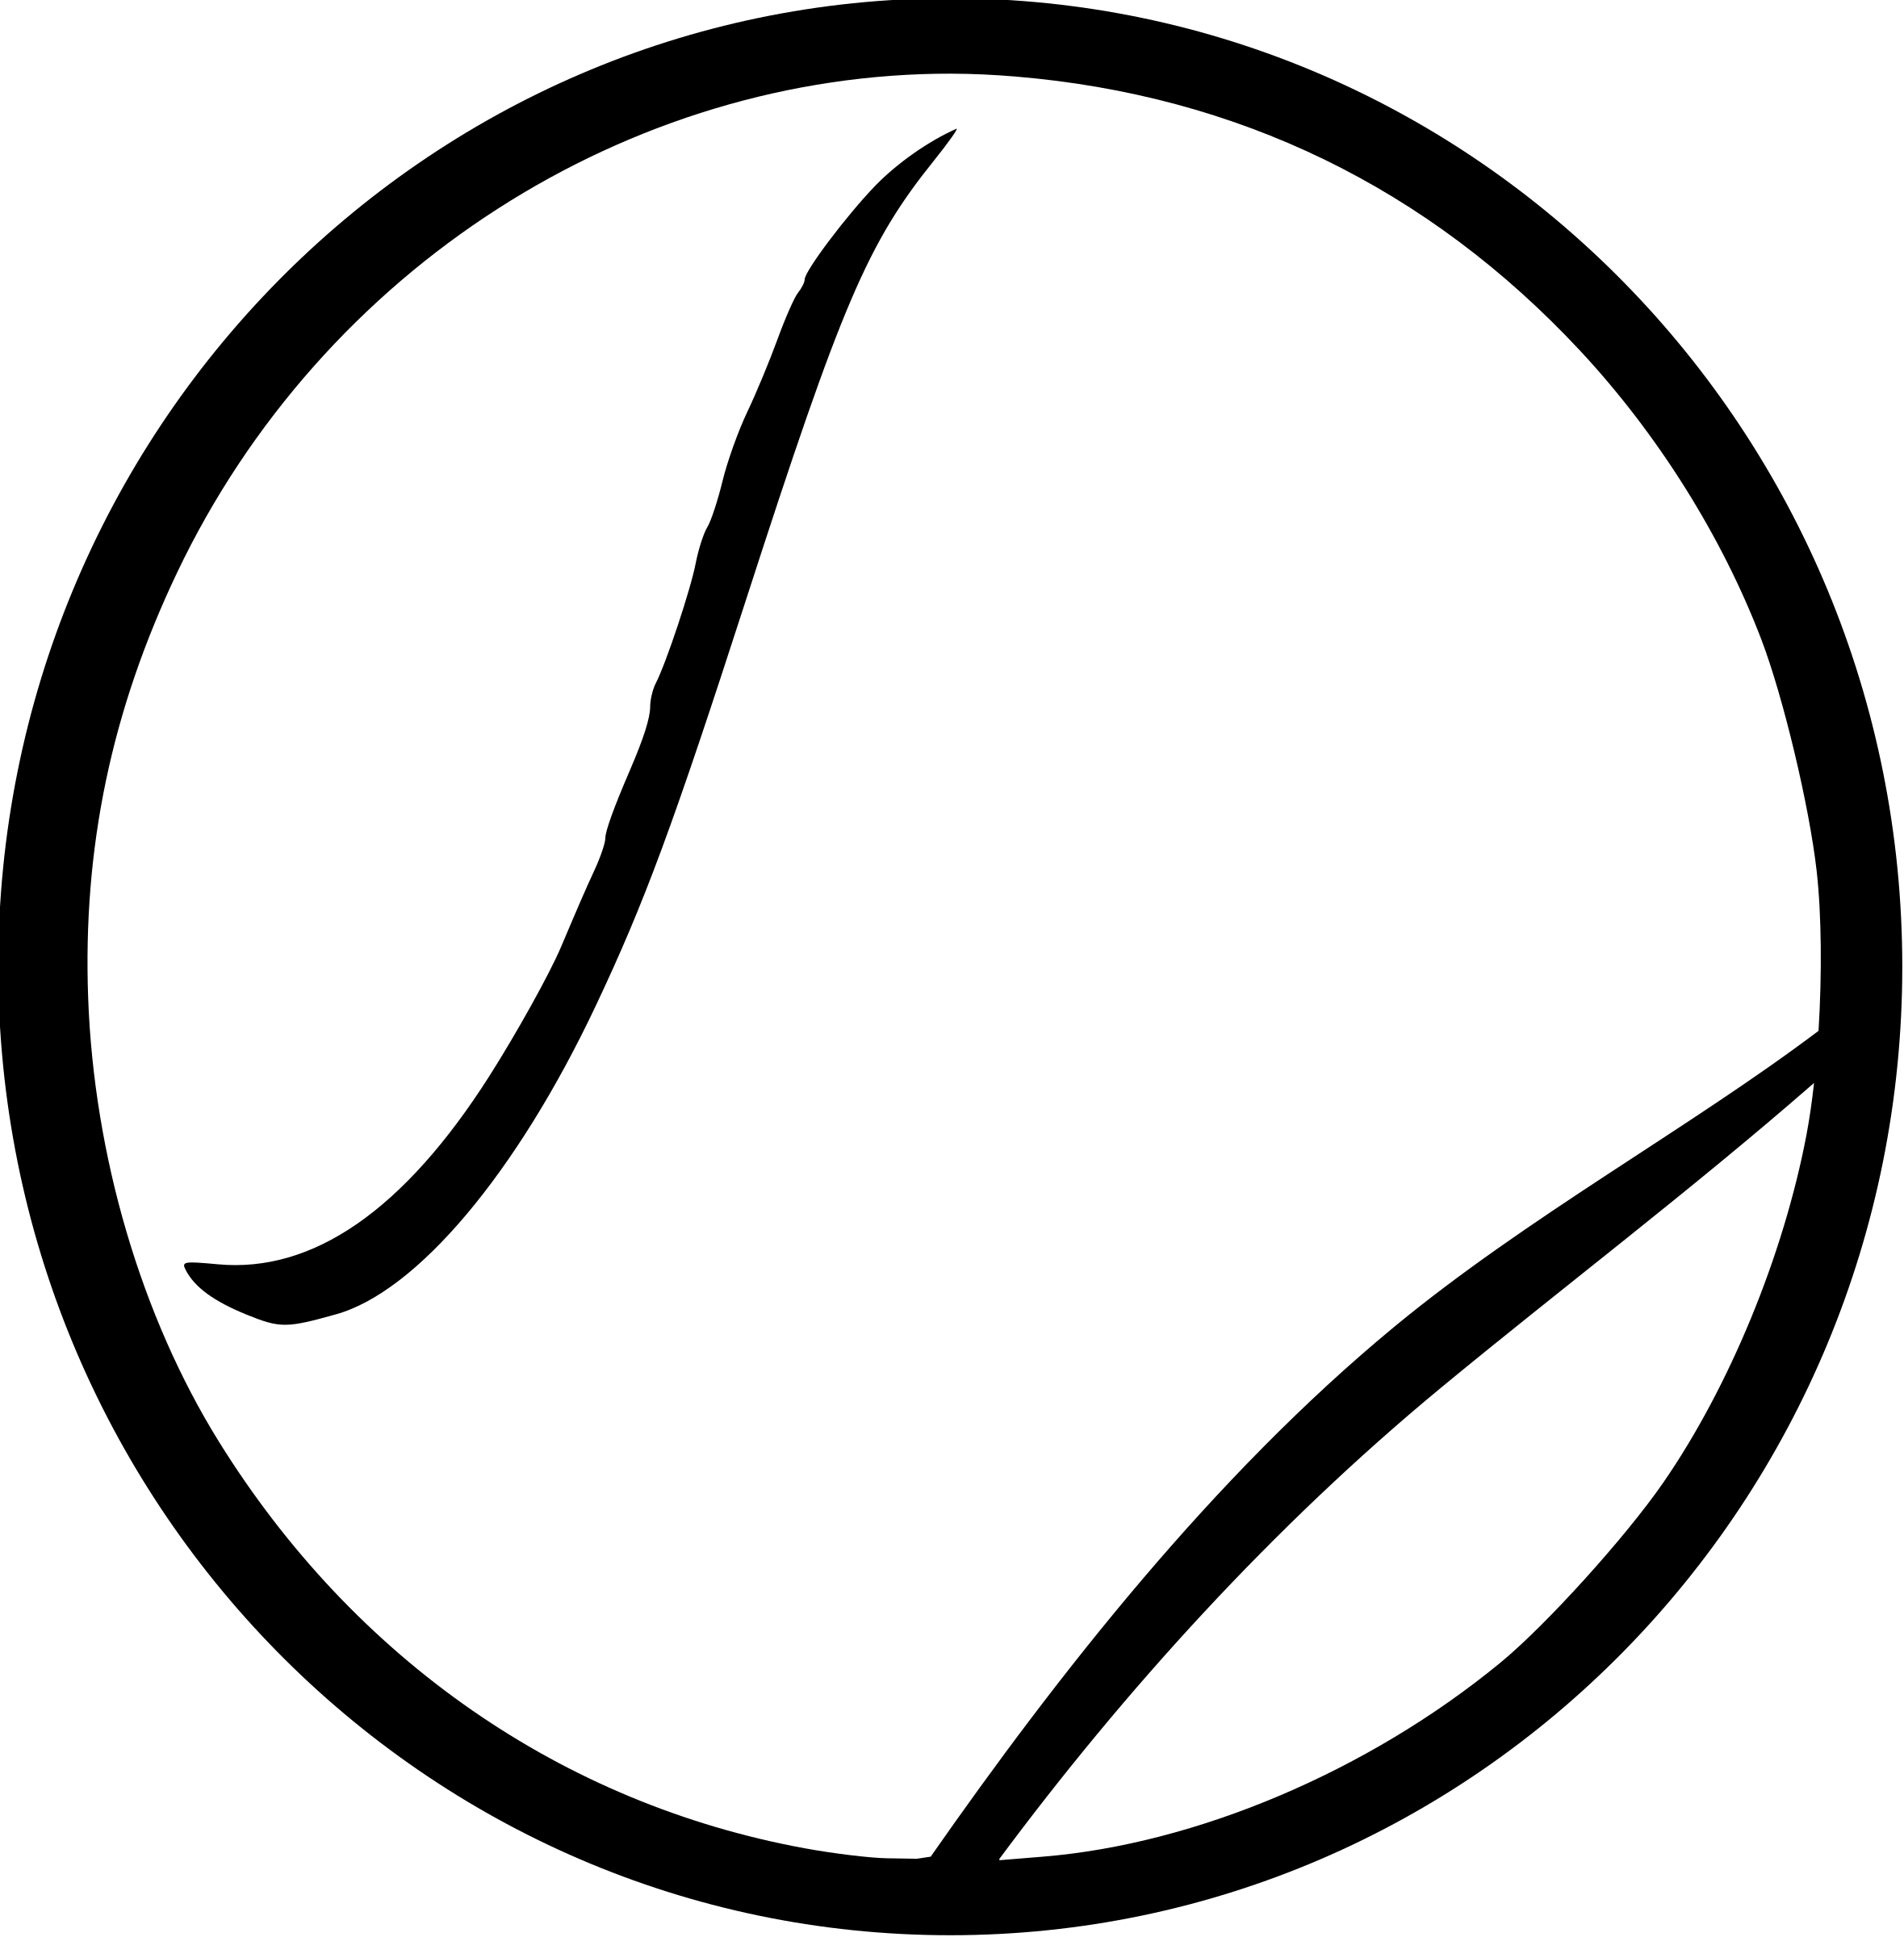 Tennis ball clipart black and white free 3 - Clipartix